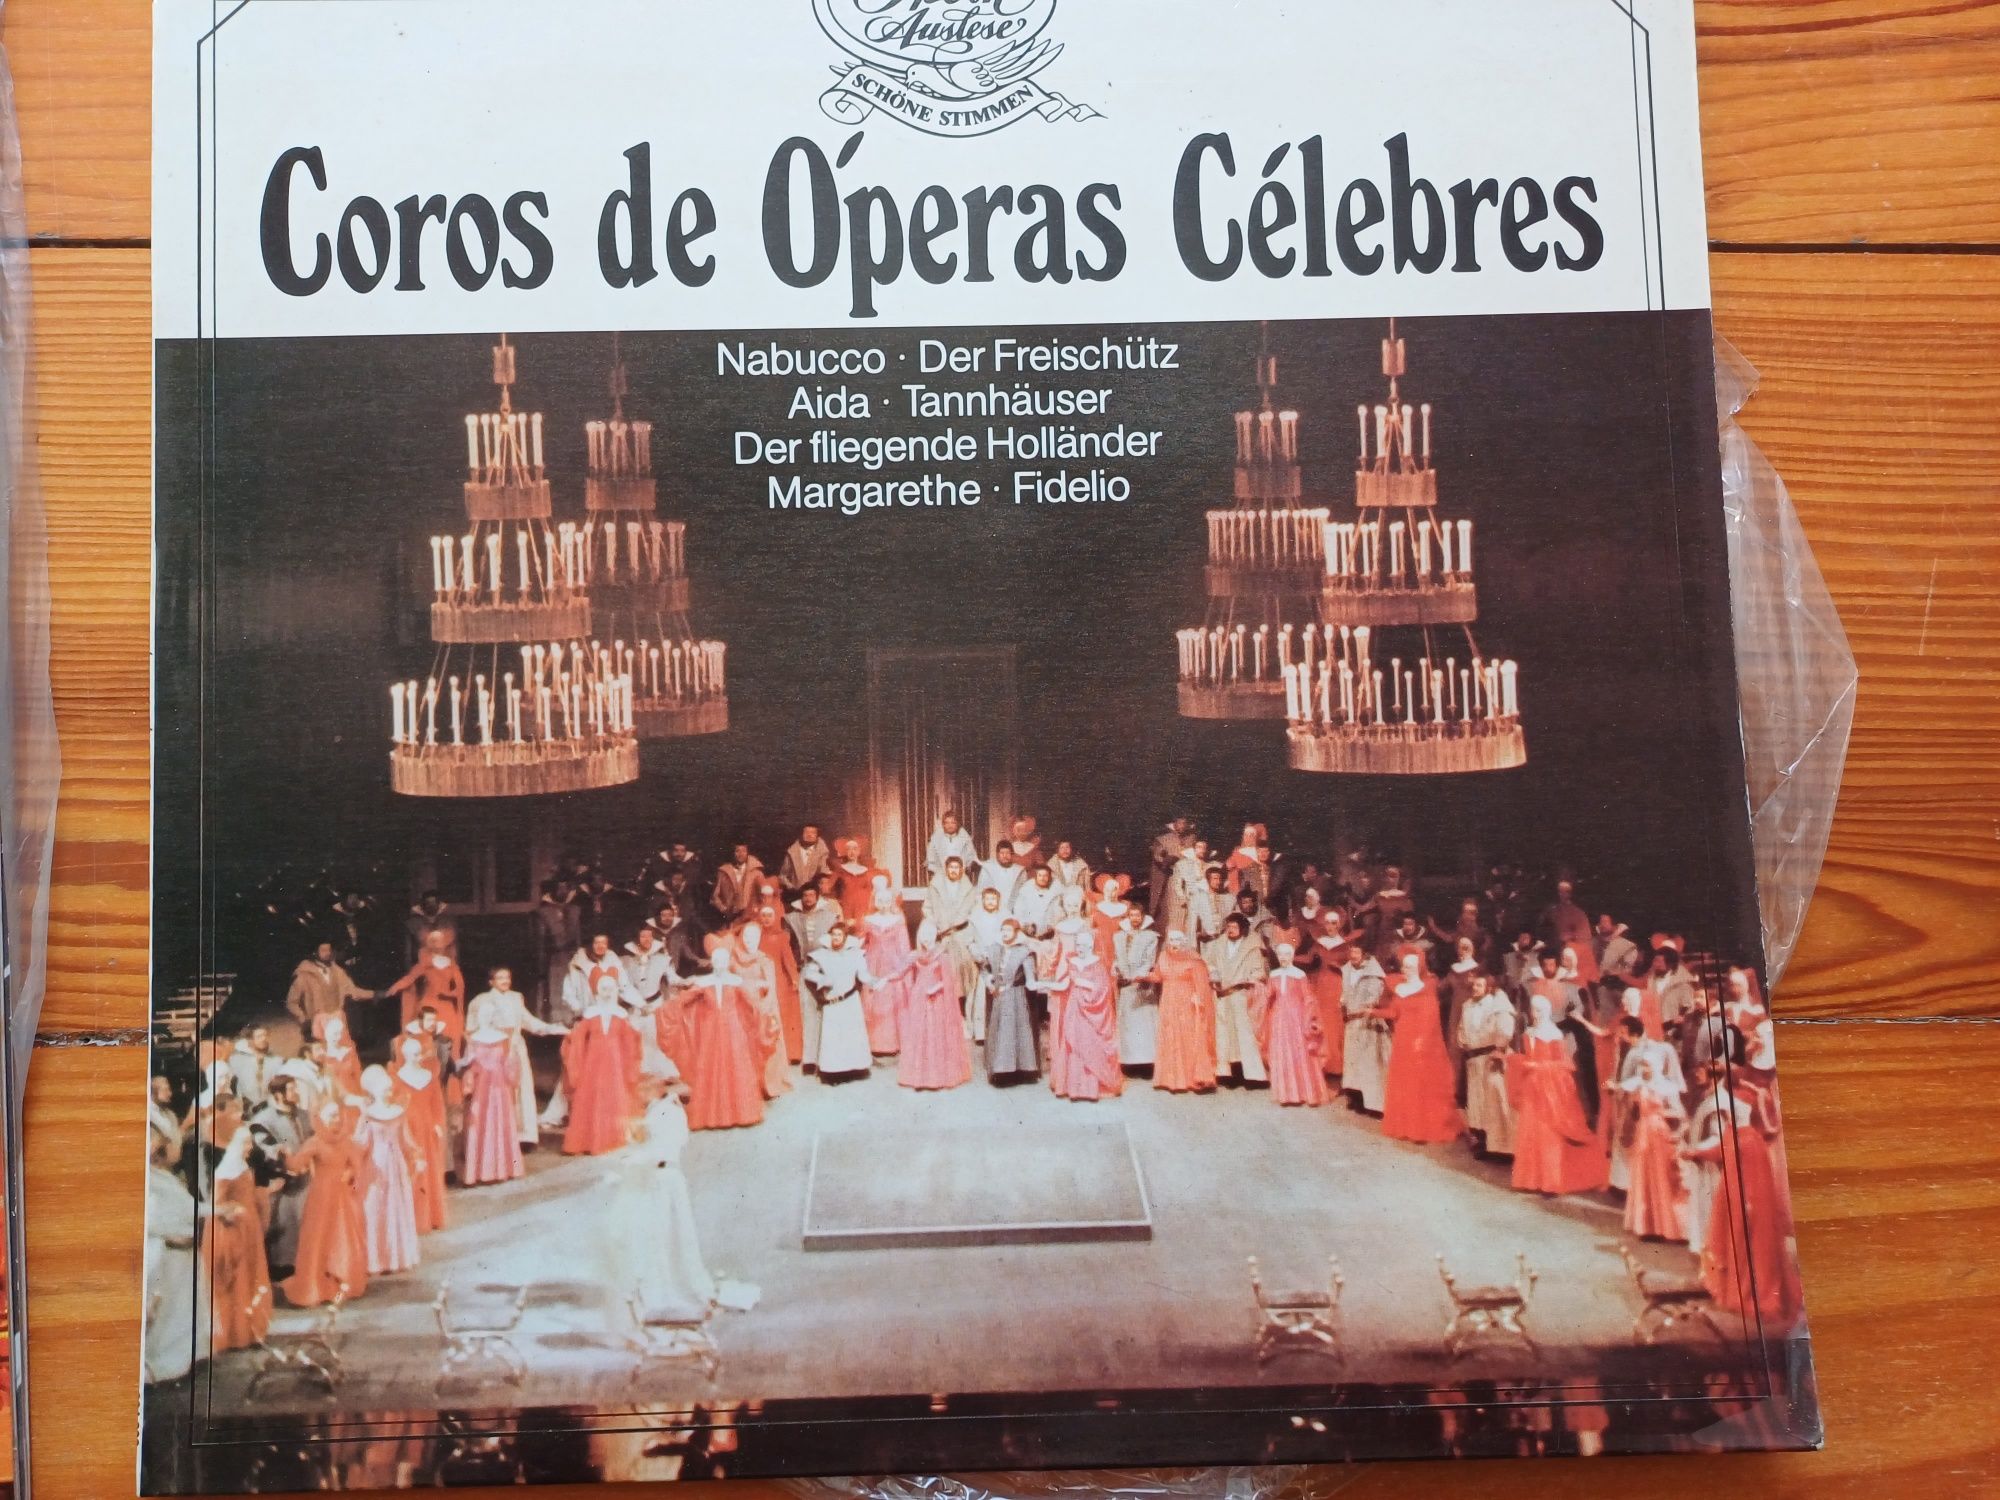 Discos de vinil de Óperas Célebres